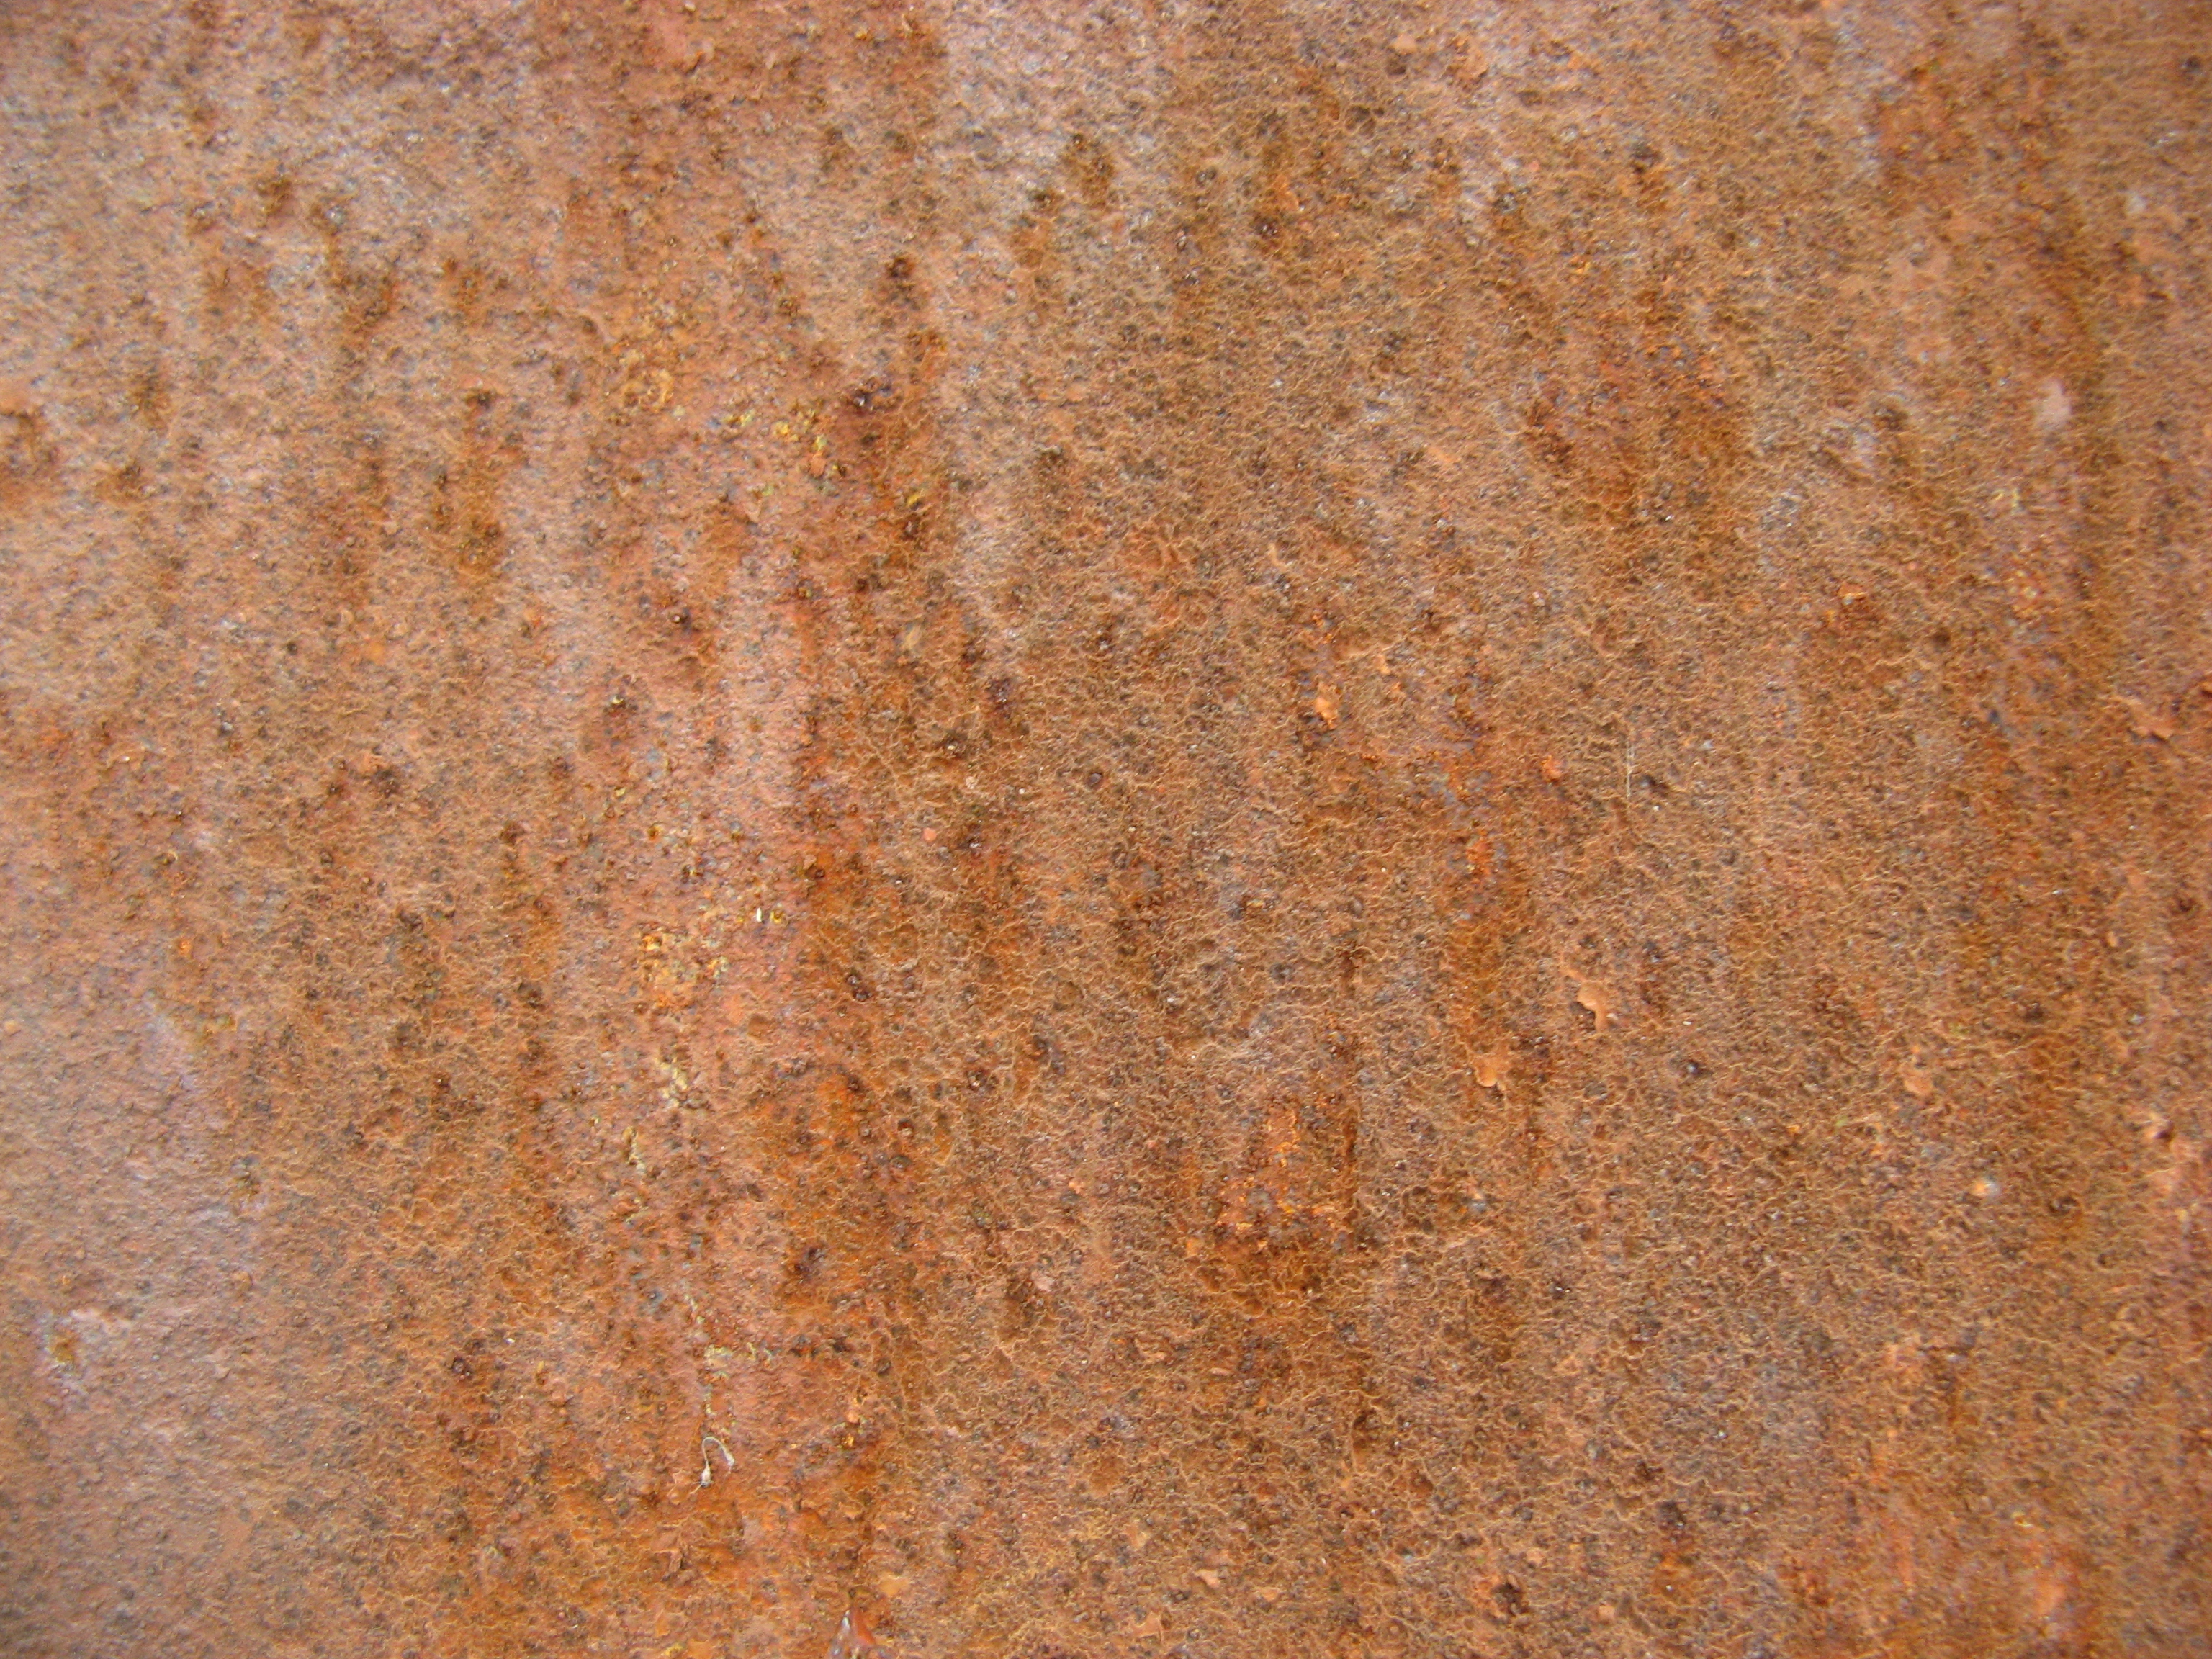 Rust on a wall фото 27